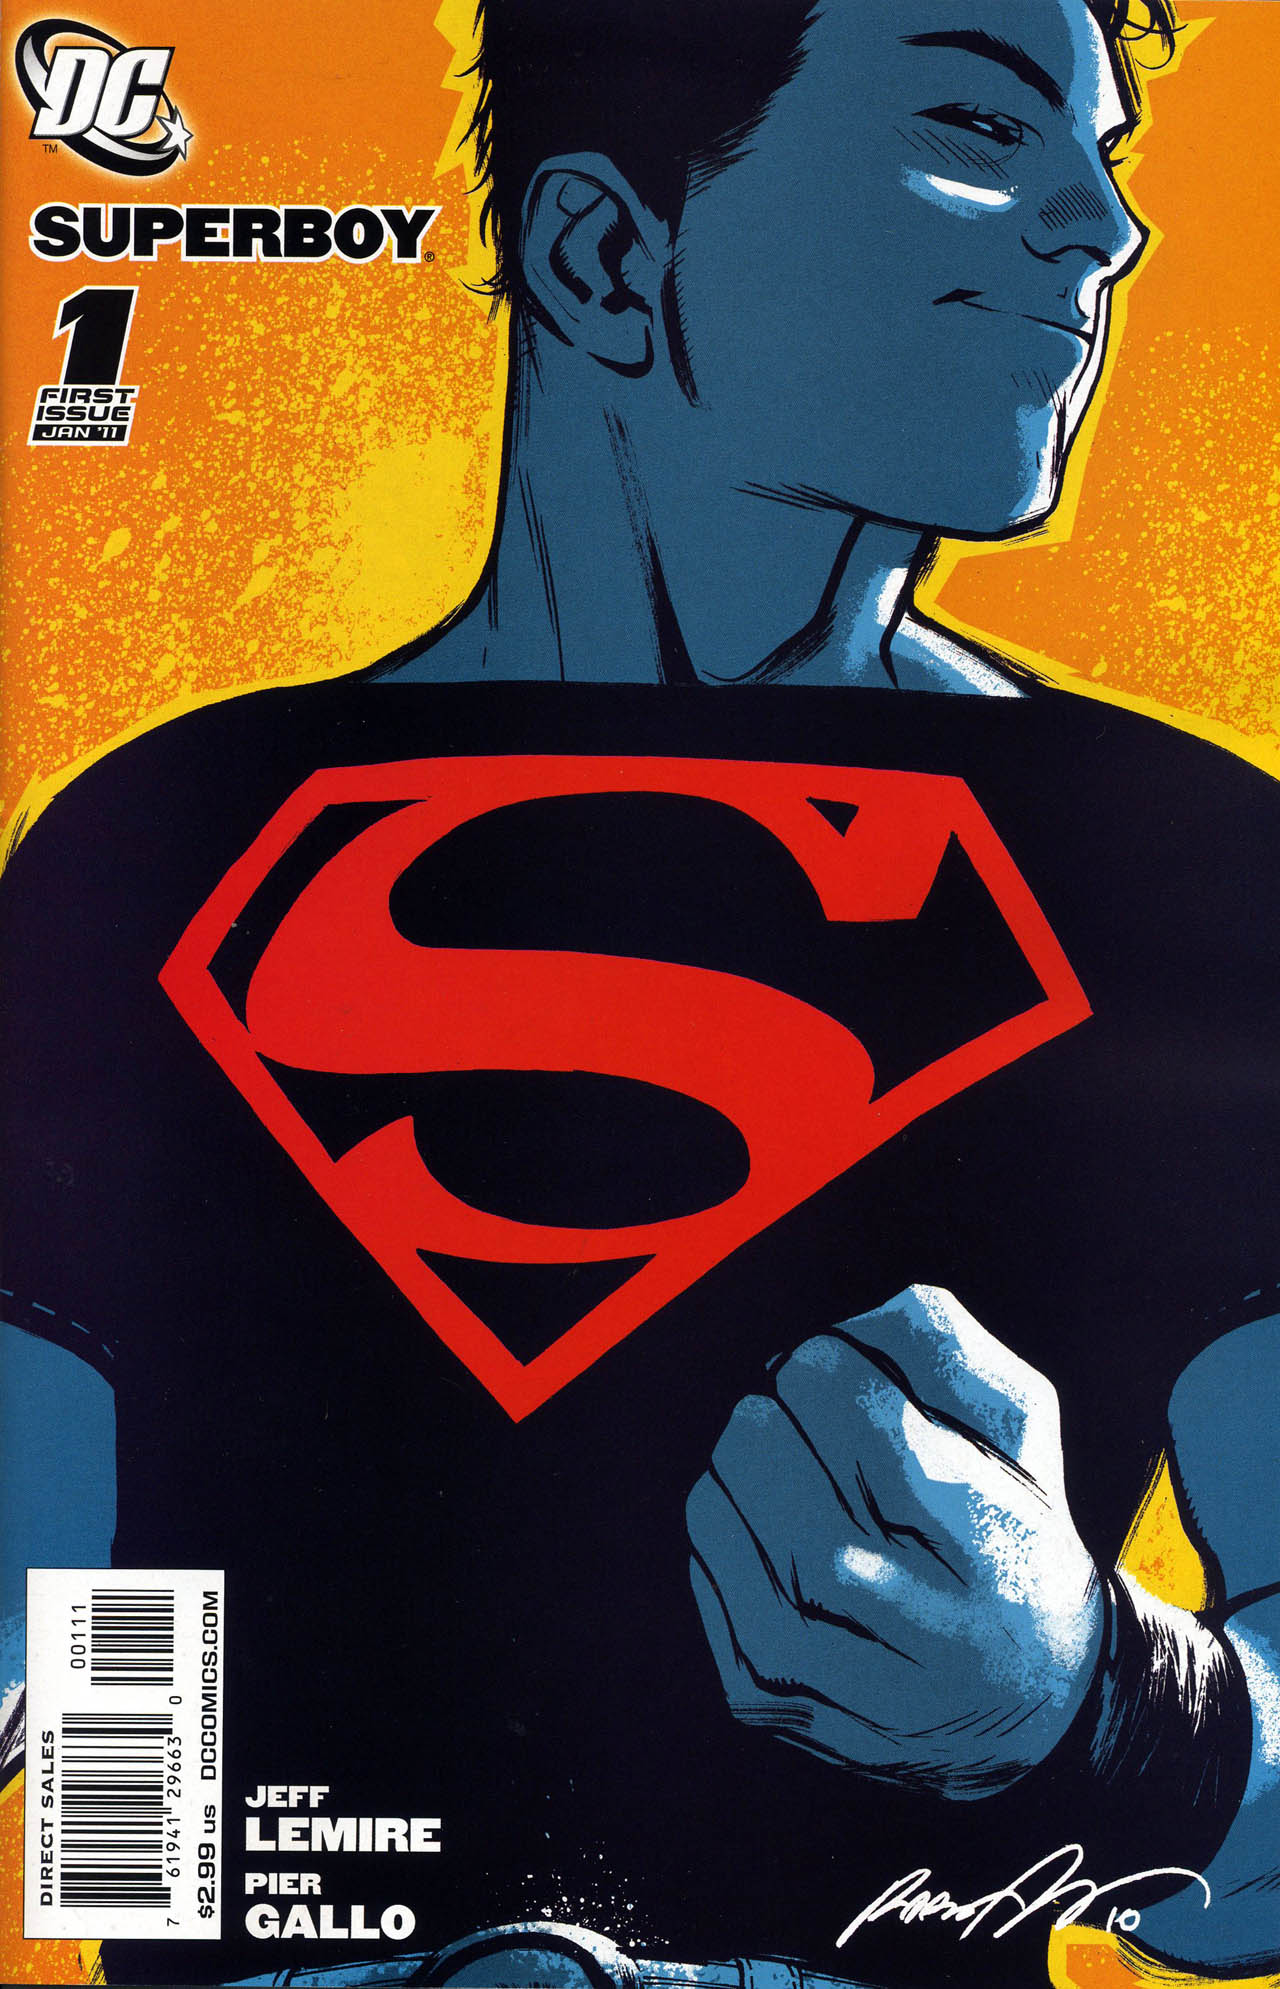 Superboy Volume. 5 Full Series Bundle Issues 1-11